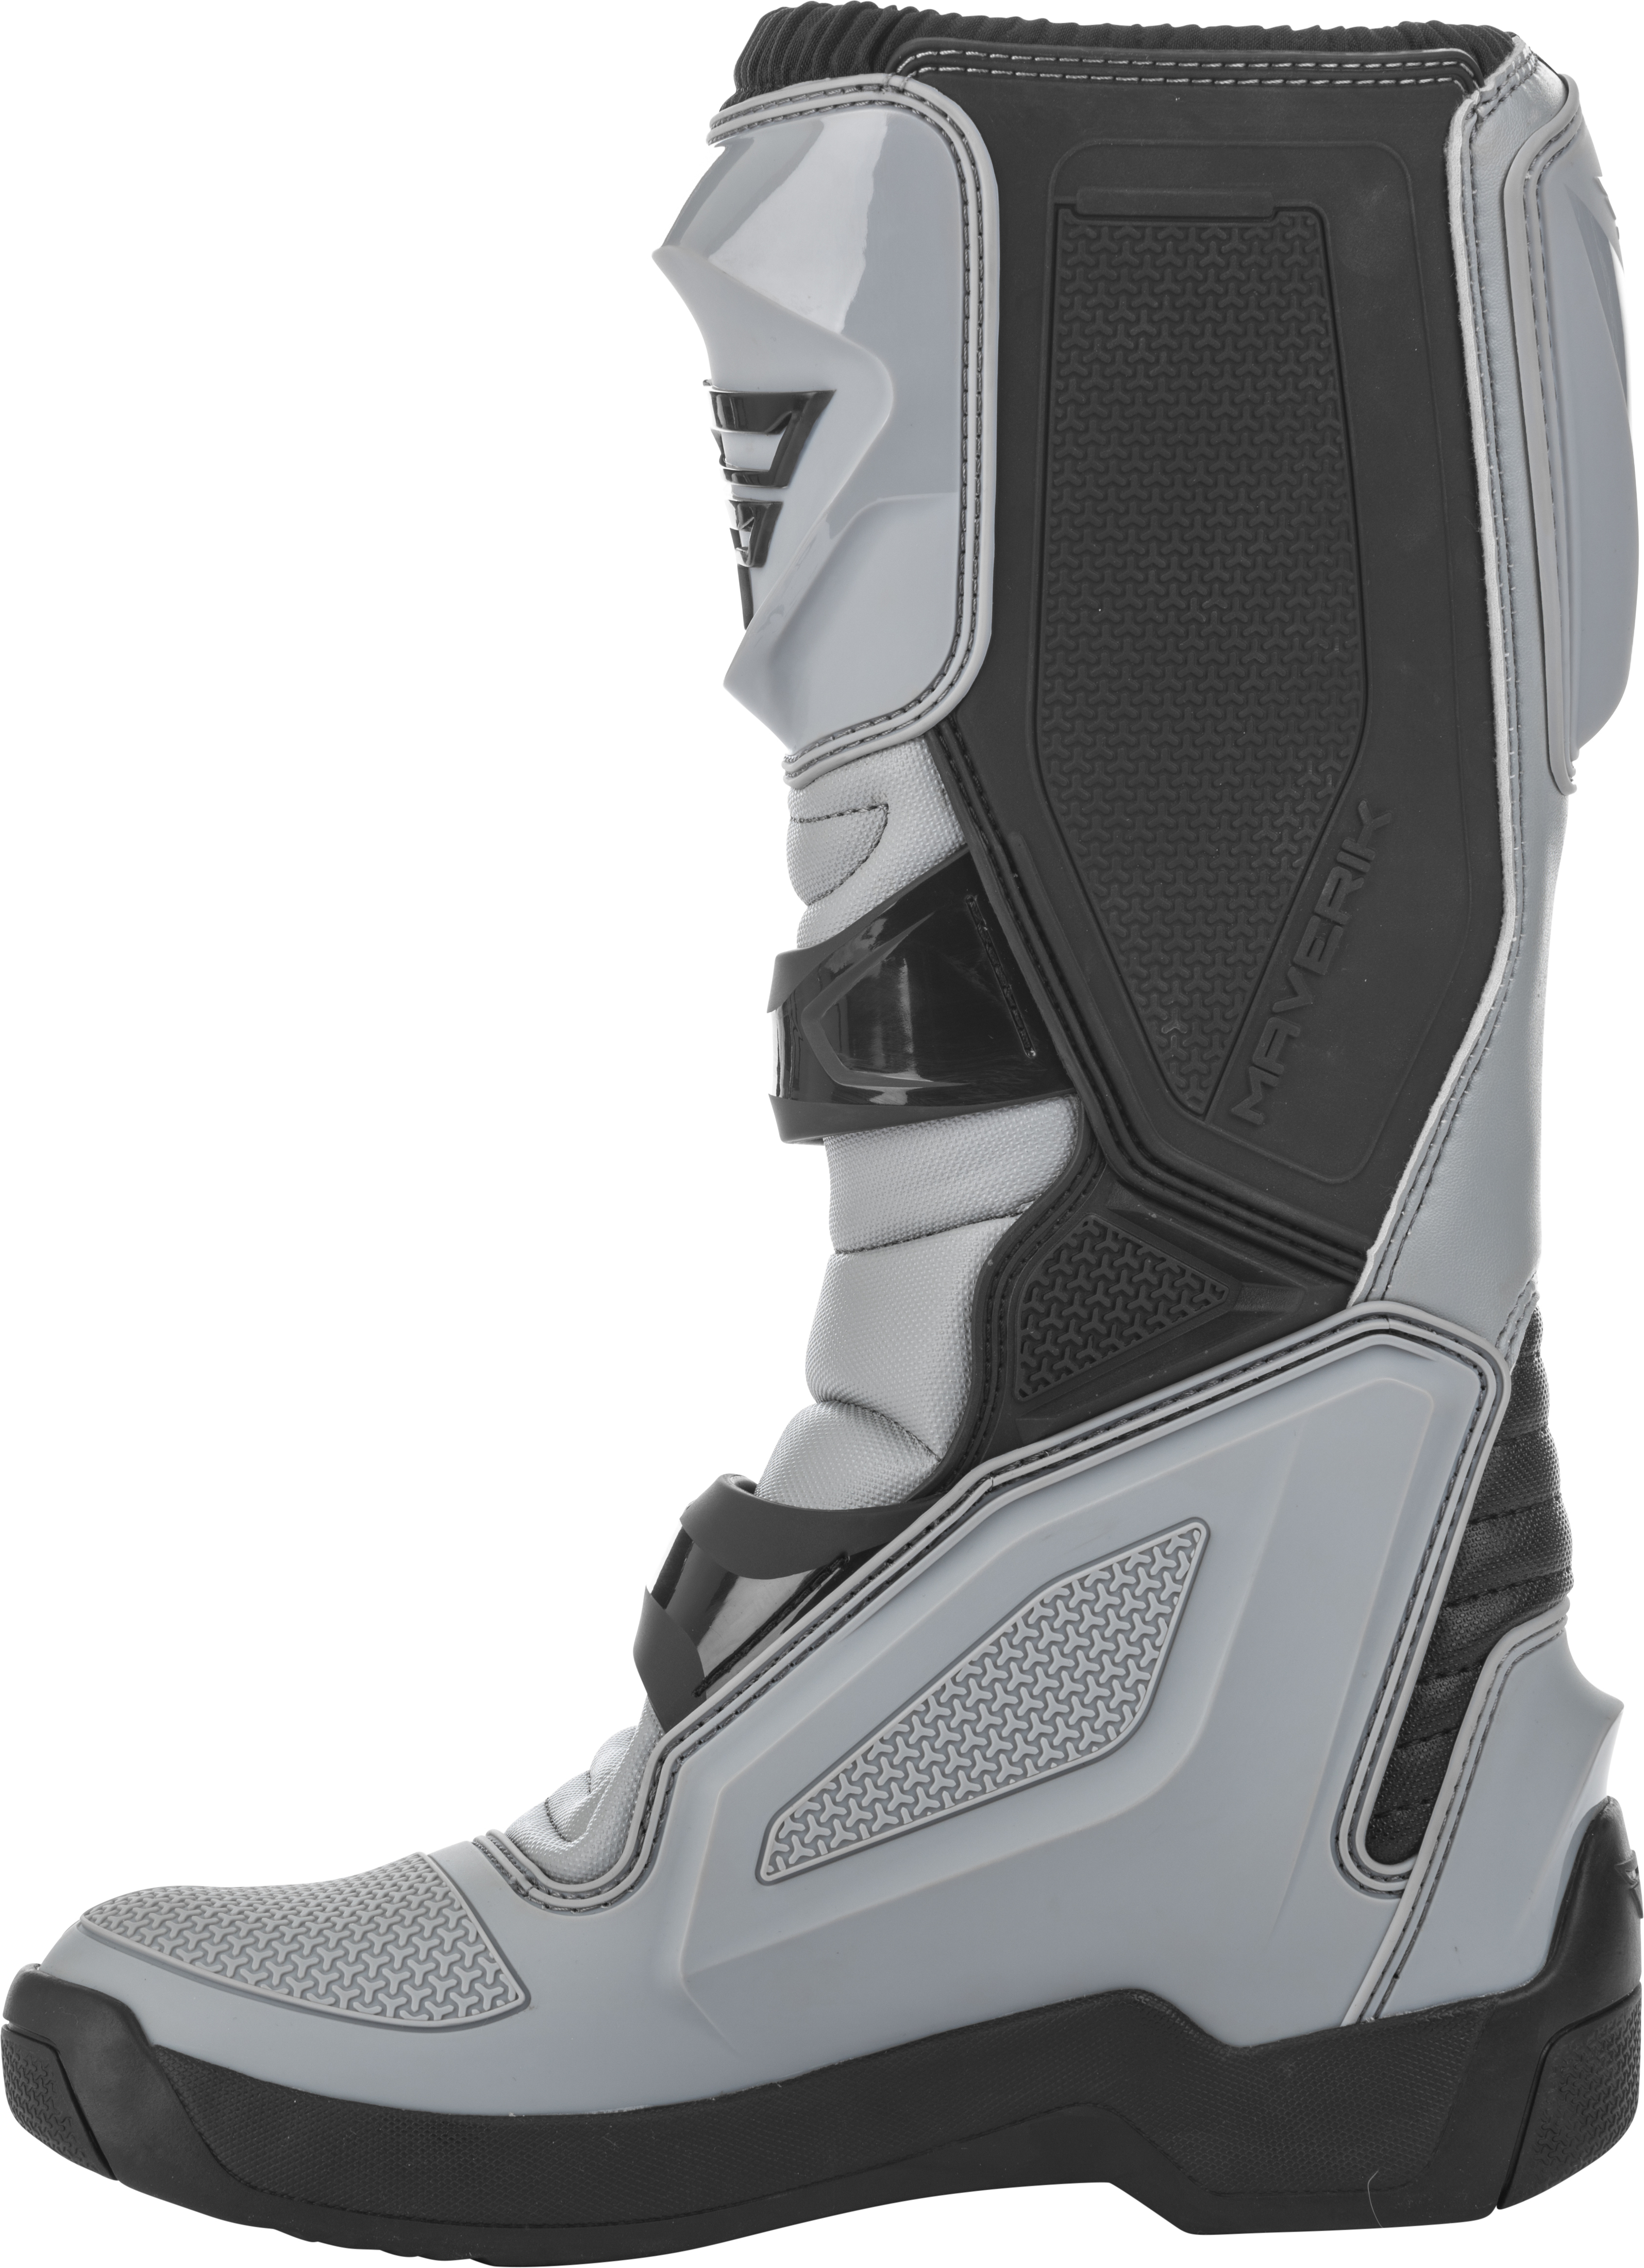 Maverik Boots Grey/Black Size 12 - Click Image to Close